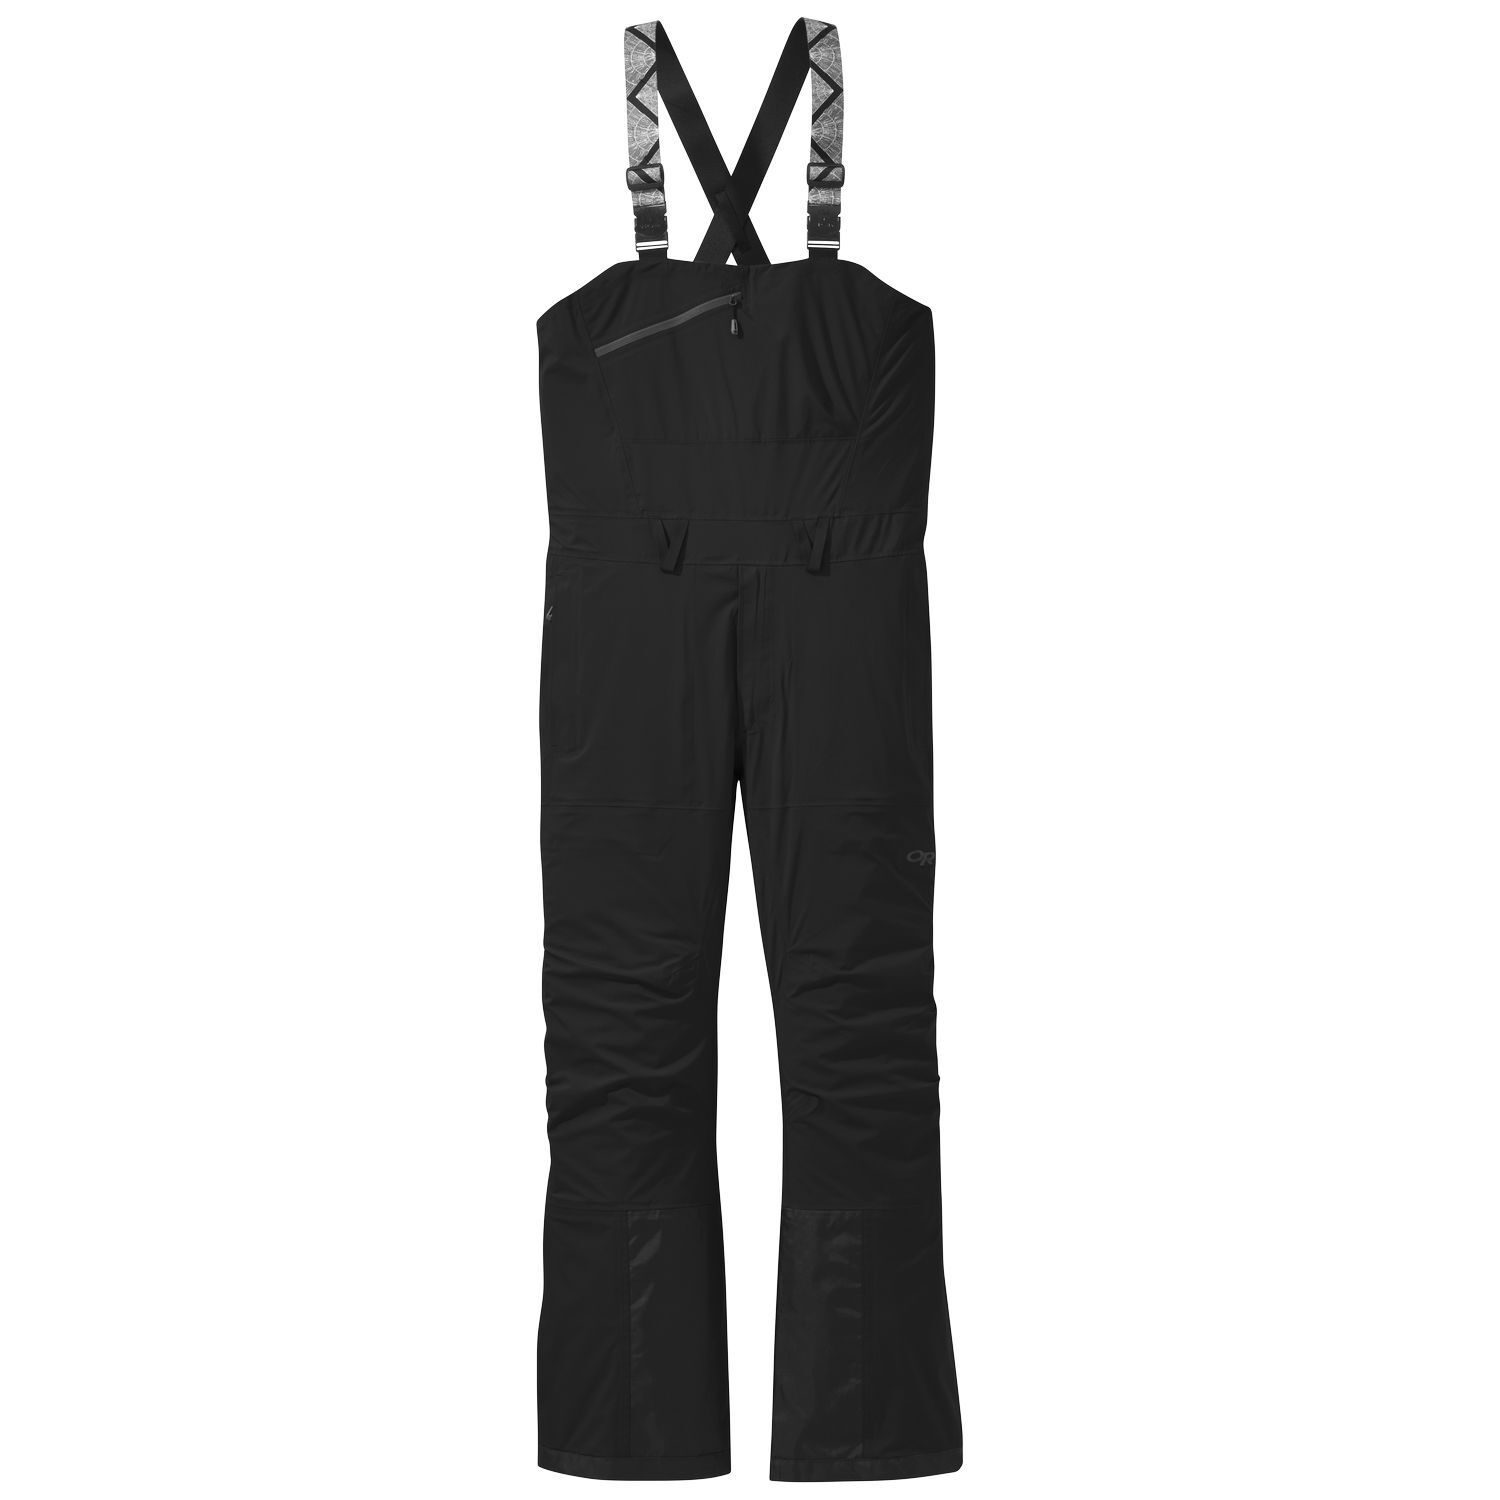 Outdoor Research Carbide Bibs - Ski pants - Men's